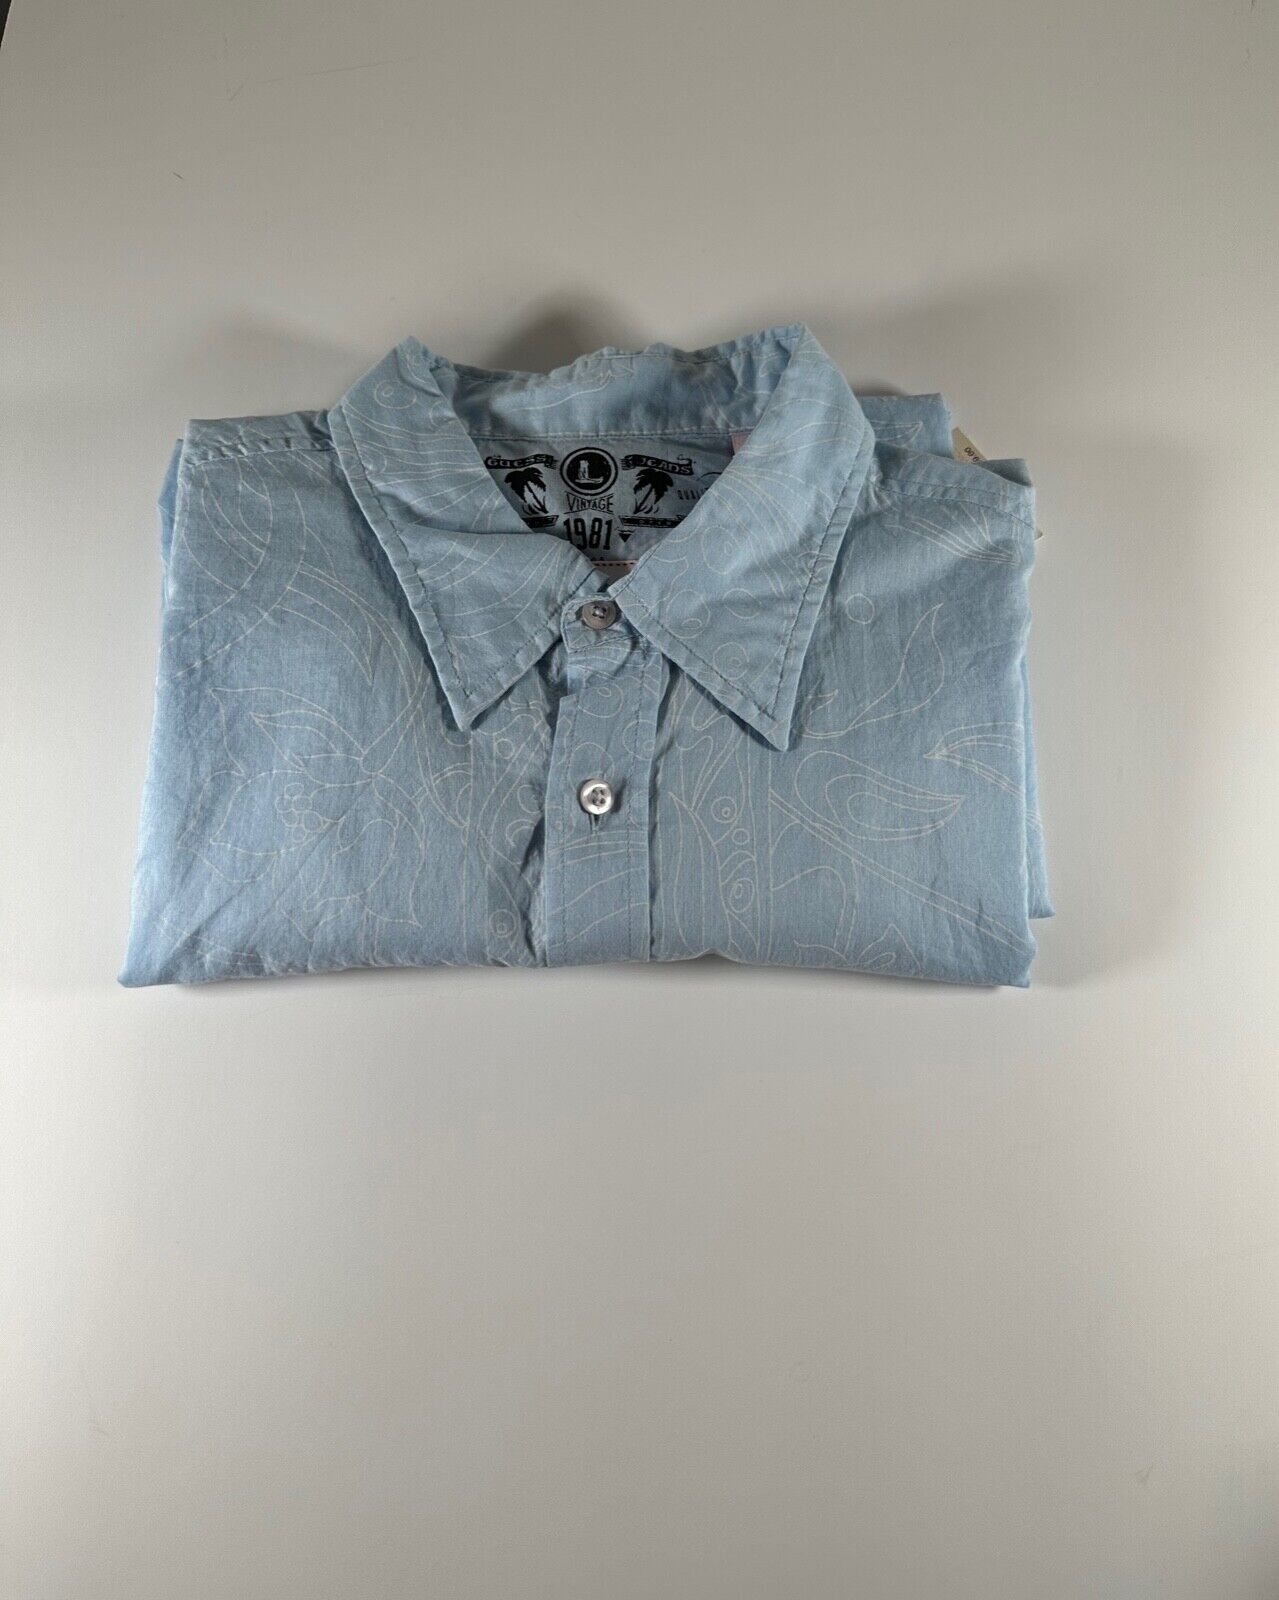 Vintage Guess Jeans Shirt, Blue, Size Large - image 1